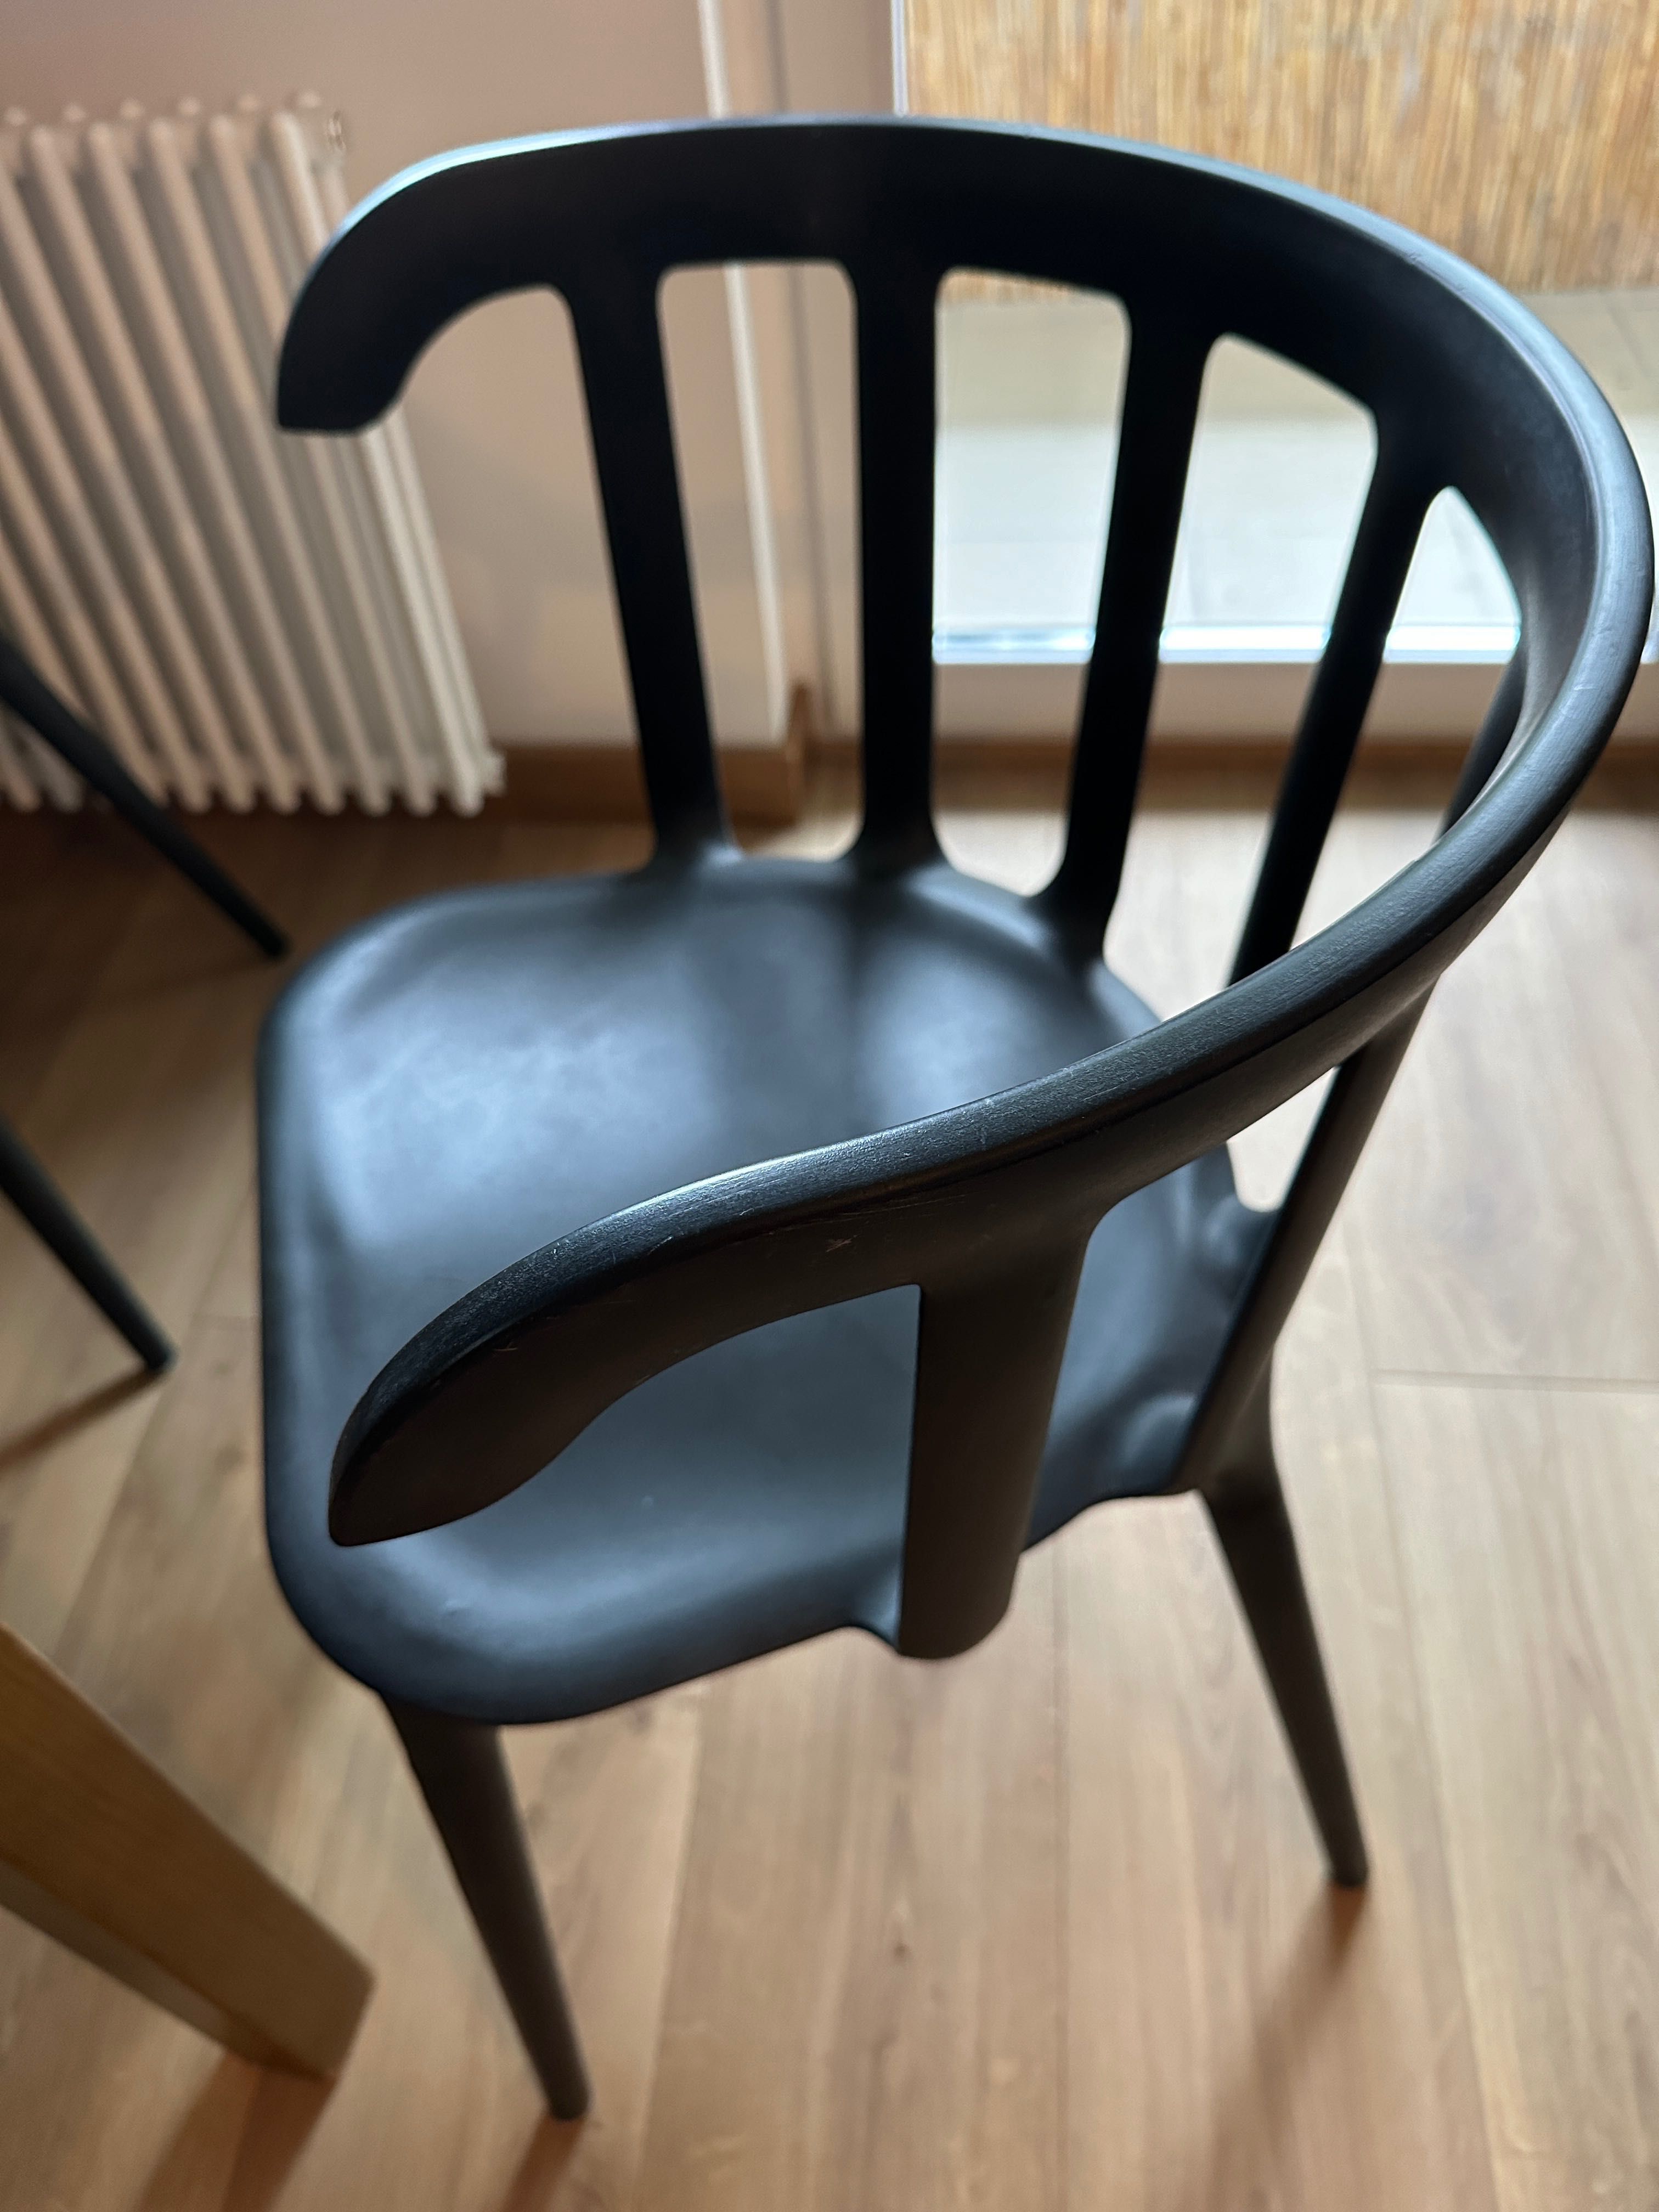 Krzesła Ikea ps, 2012, 2 sztuki, czarne